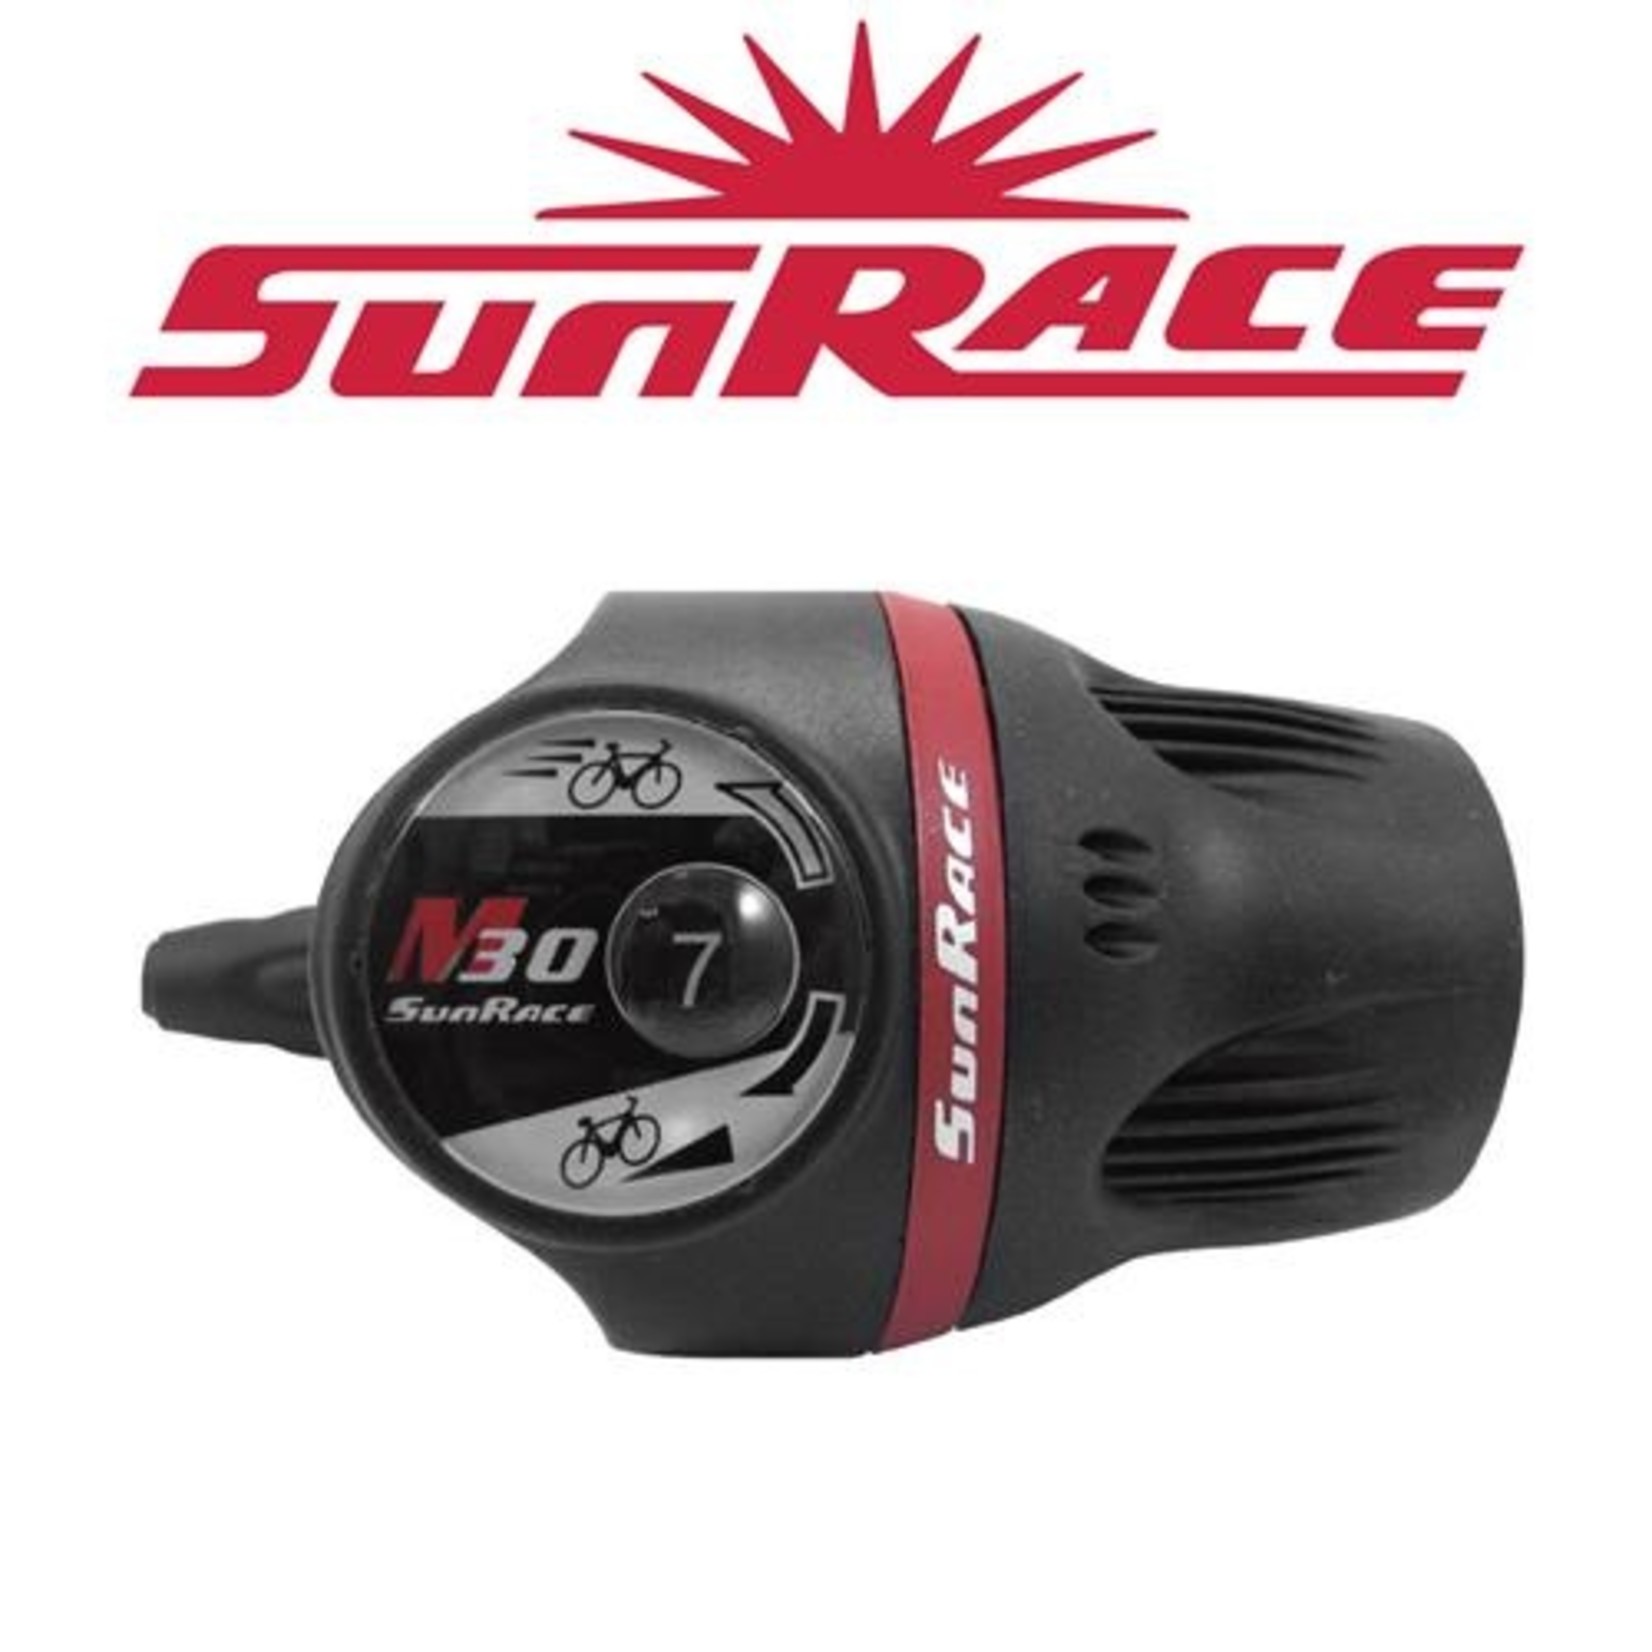 Sunrace Sunrace Bike/Cycling Right Hand Twist Shifter - 7 Speed